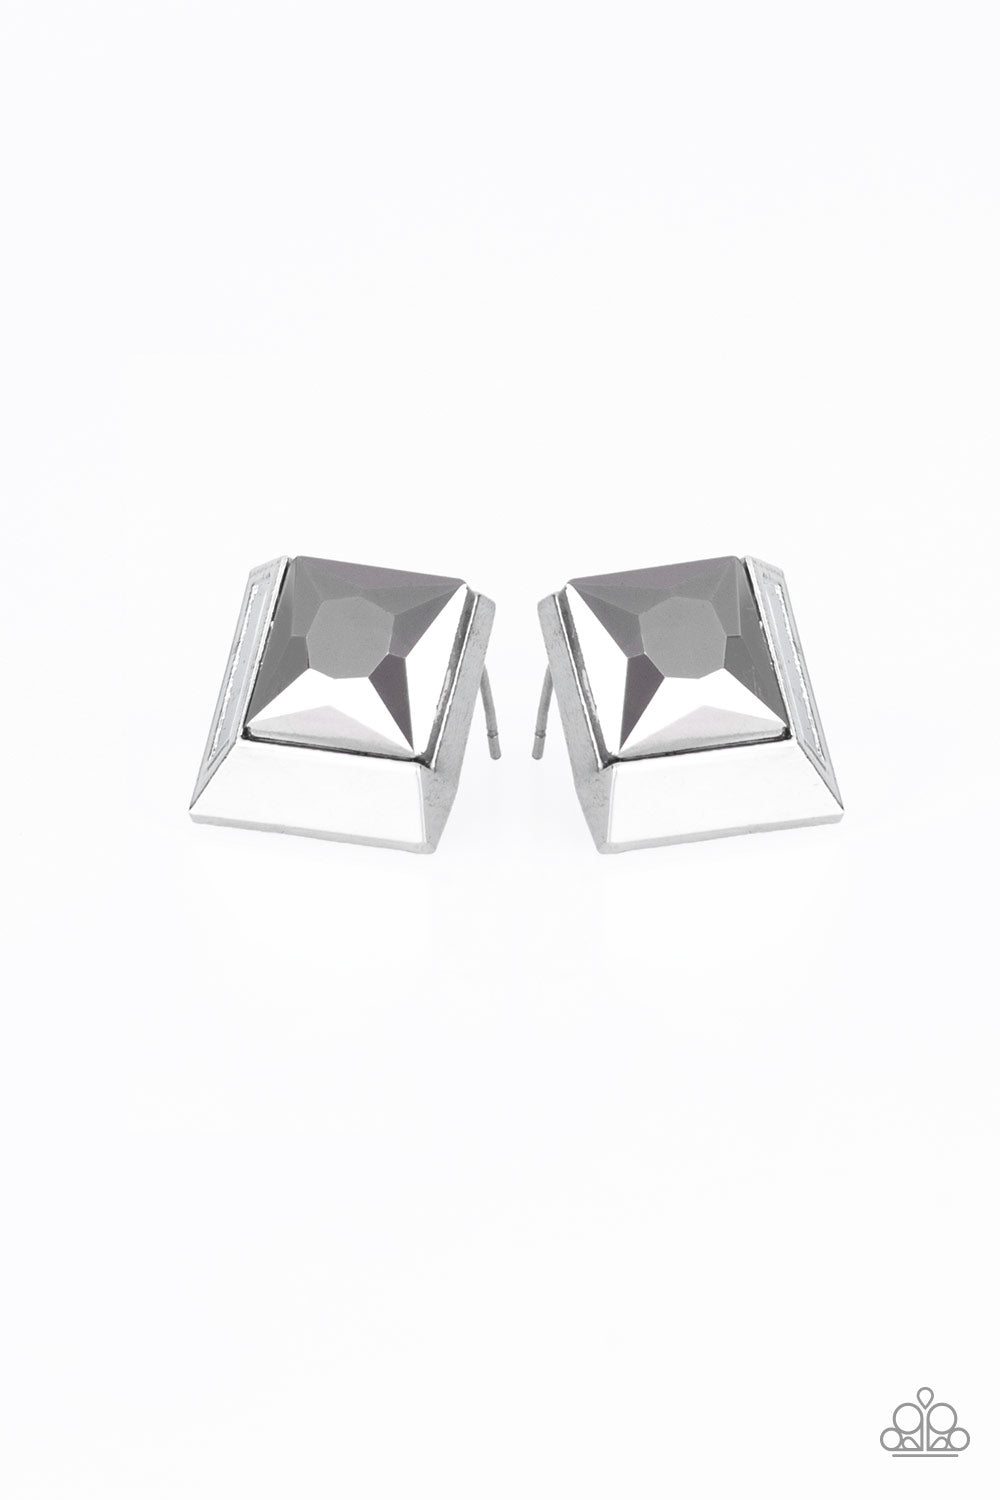 Stellar Square - Silver Hematite Earrings - Princess Glam Shop